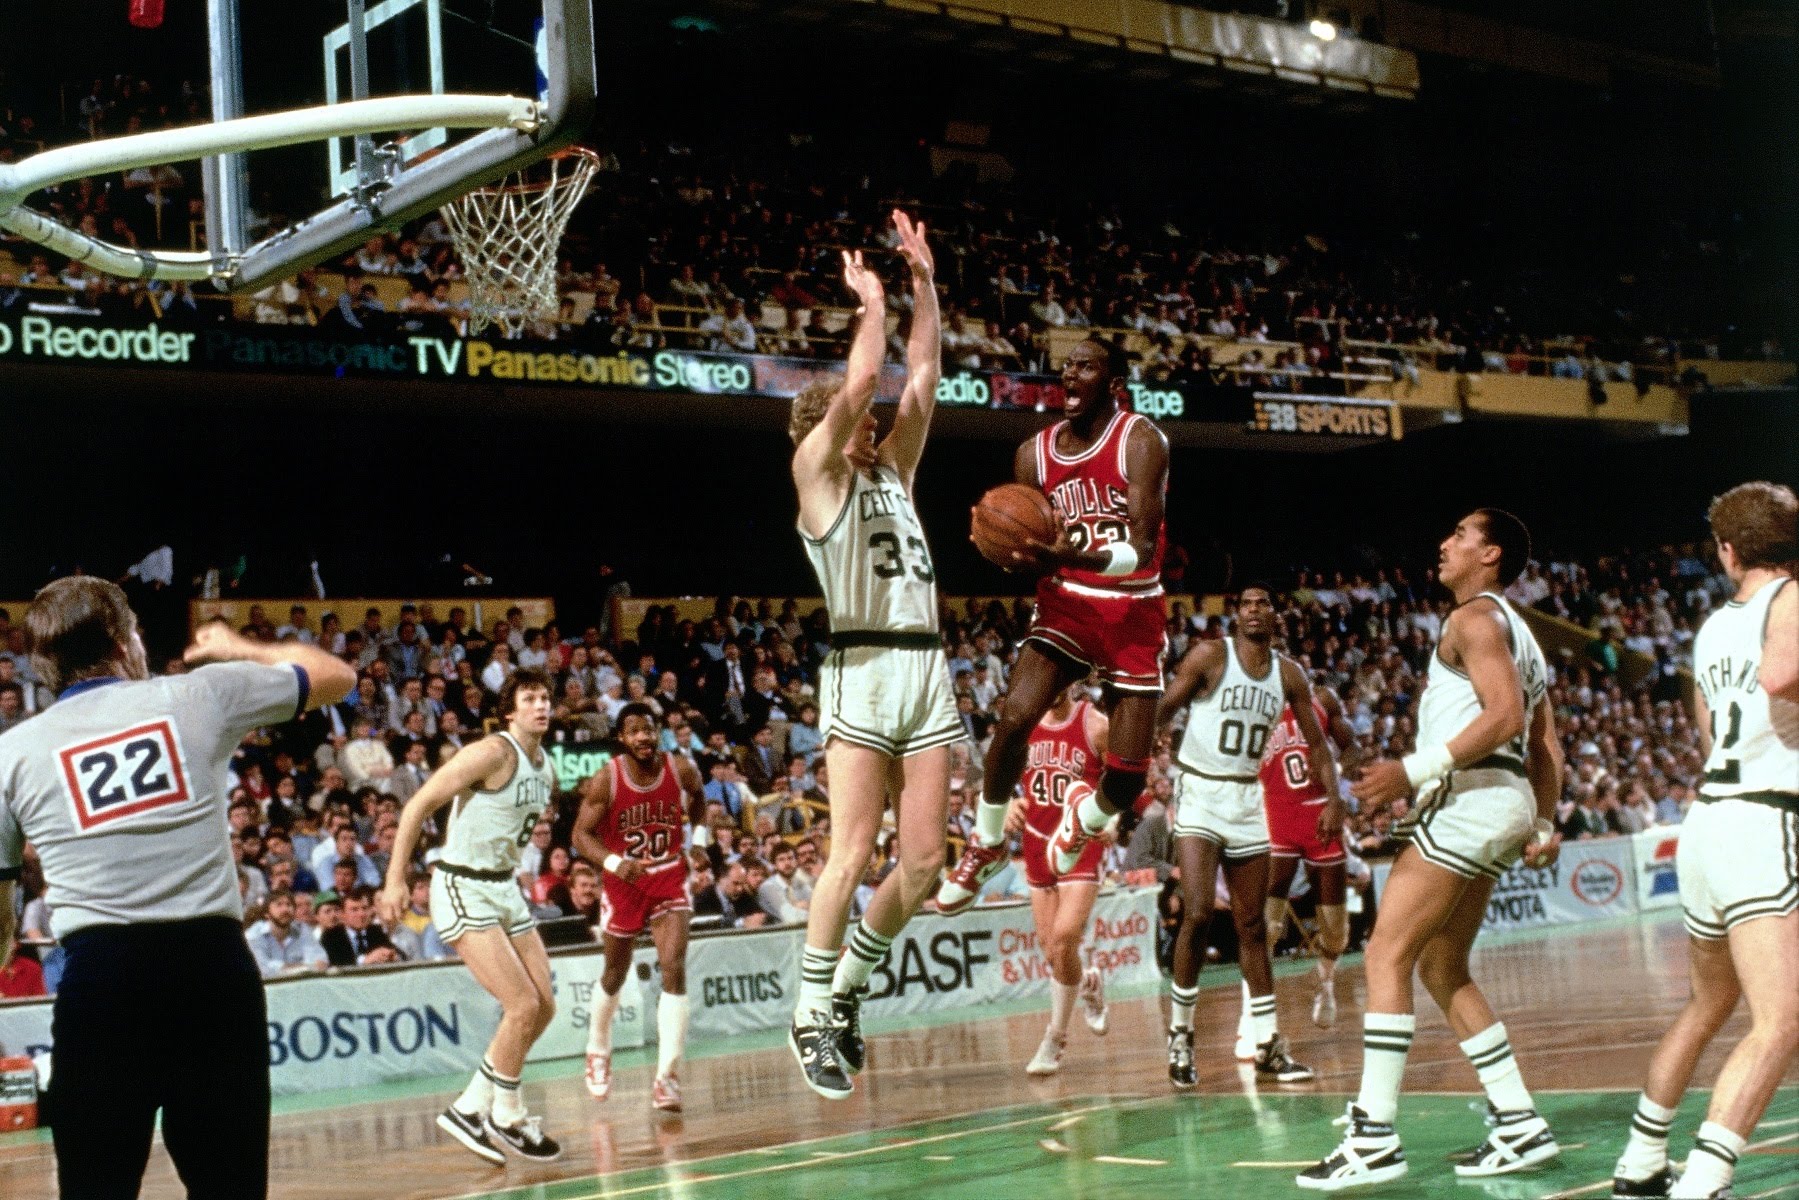 Throwback Thursday: Michael Jordan drops 63 points on the Boston Celtics in 1986 NBA Playoffs